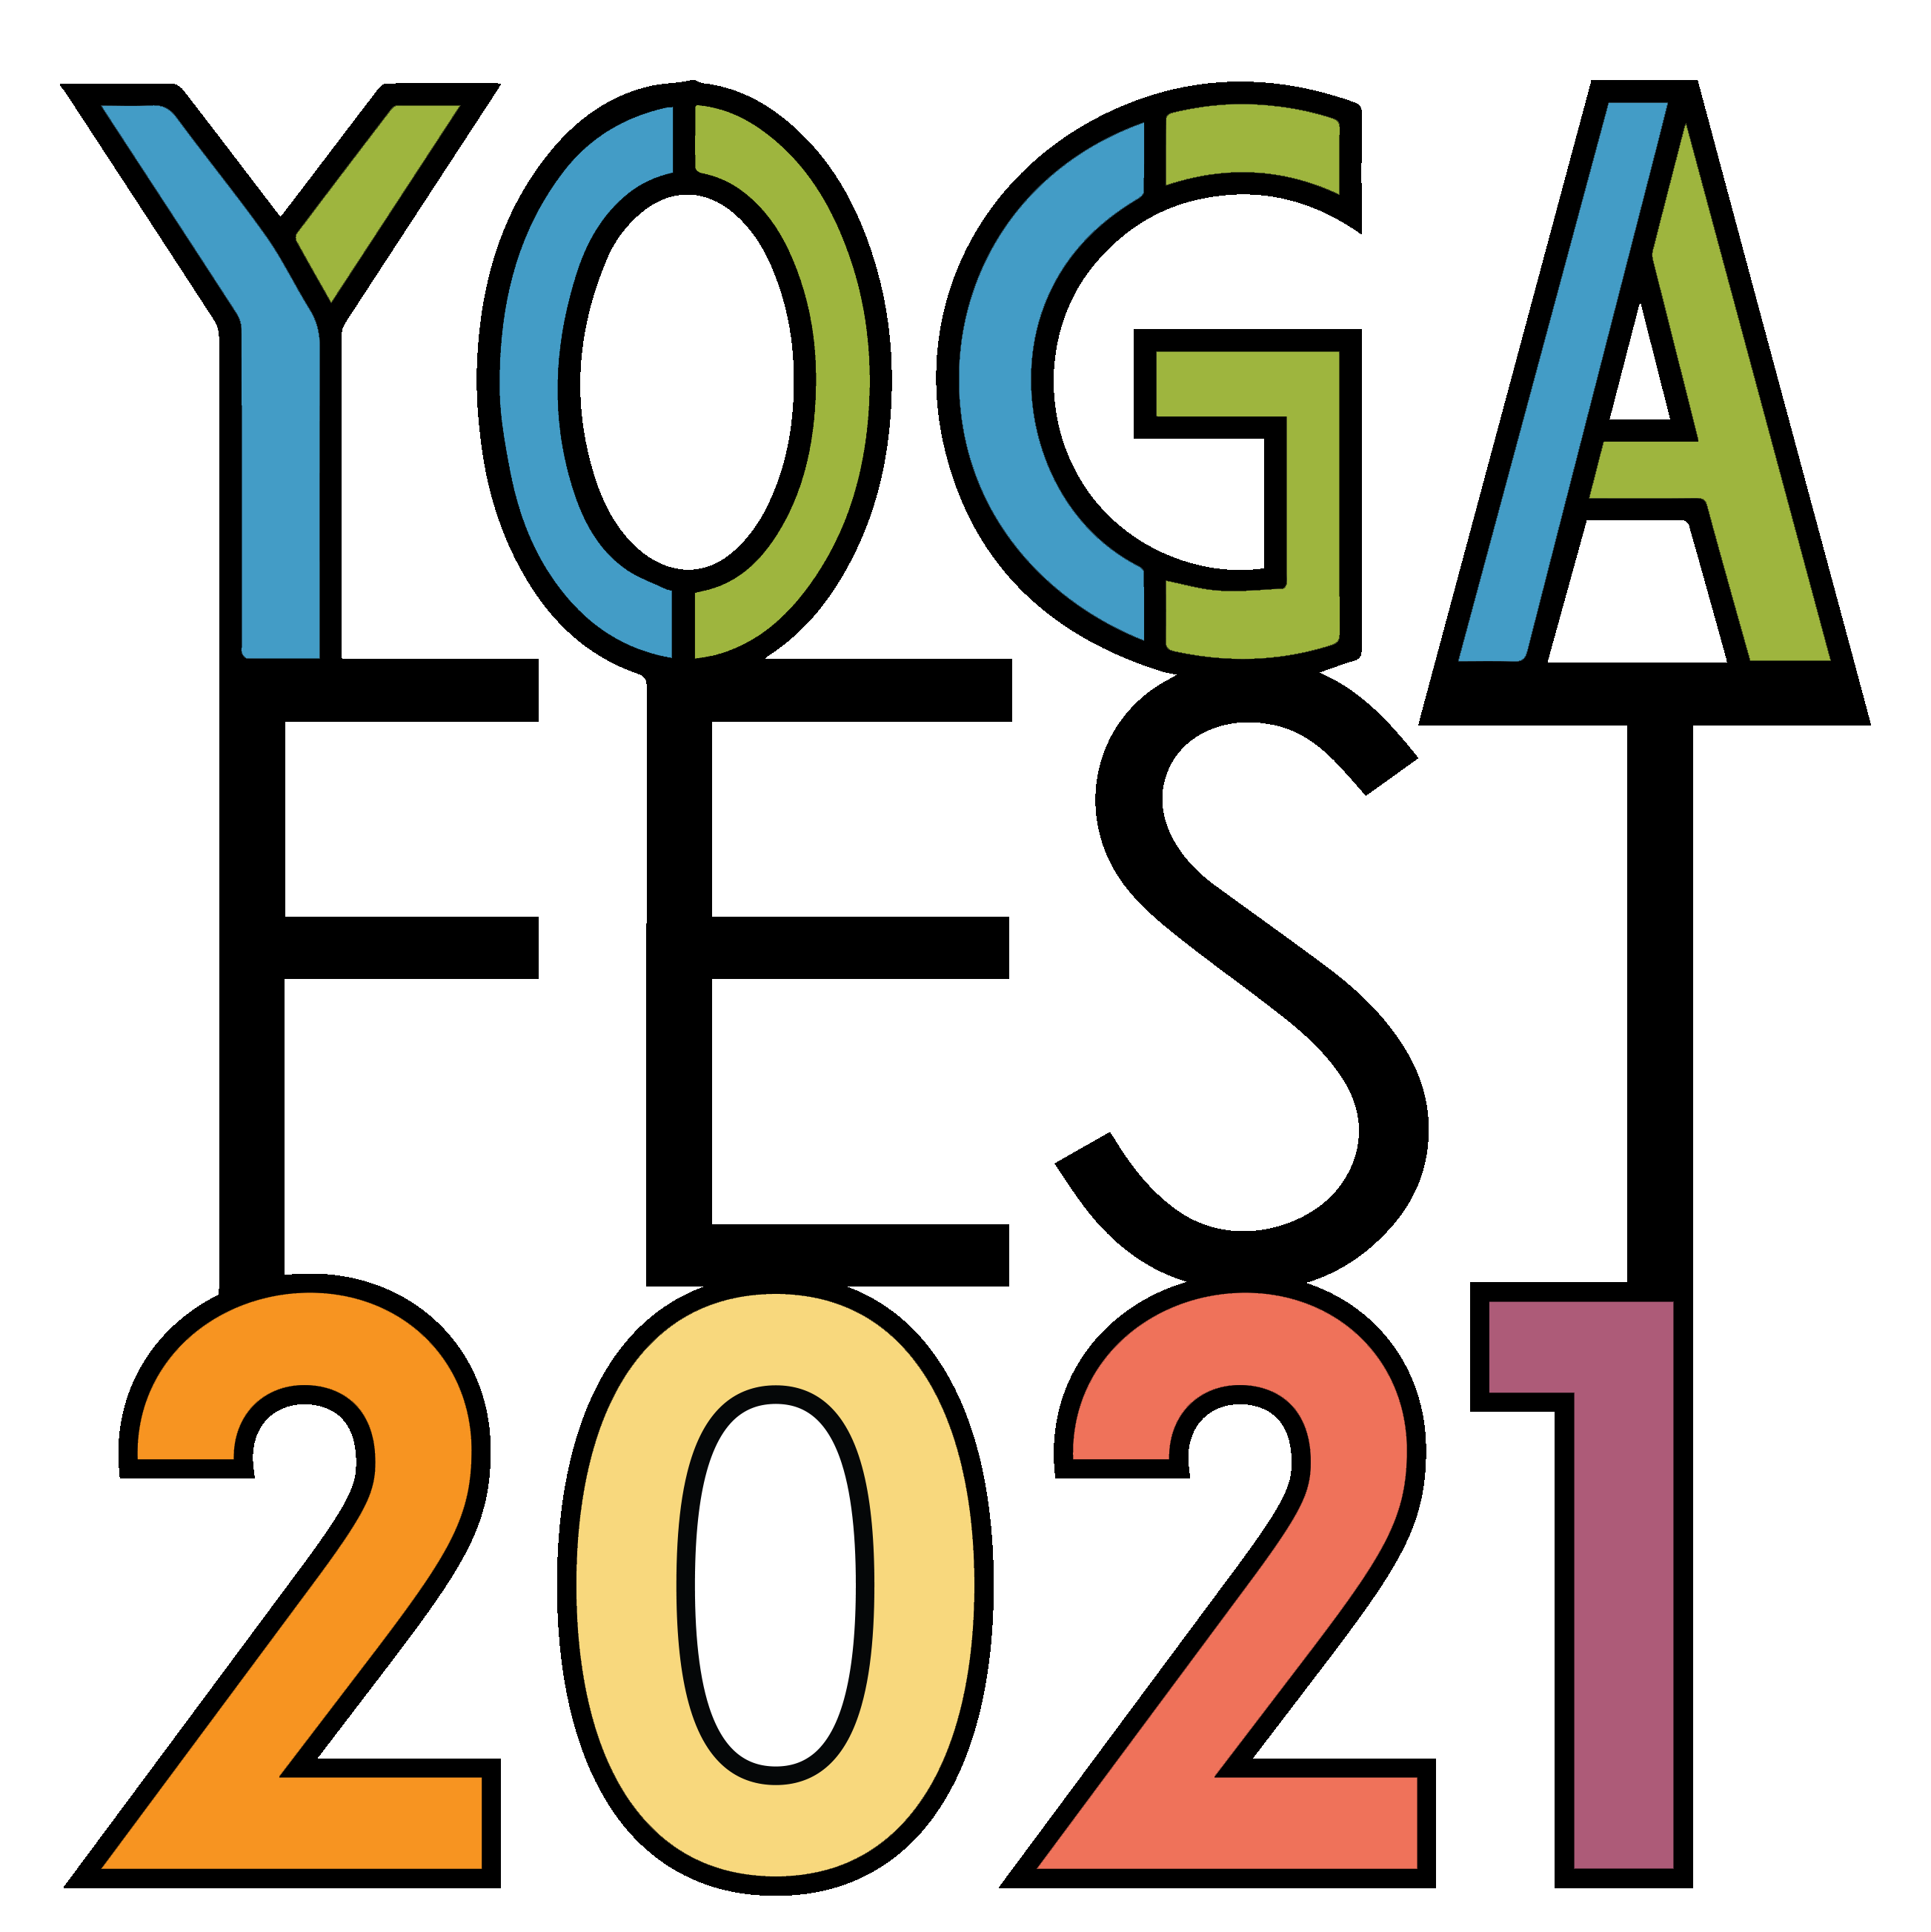 YogaFest Text-only logo